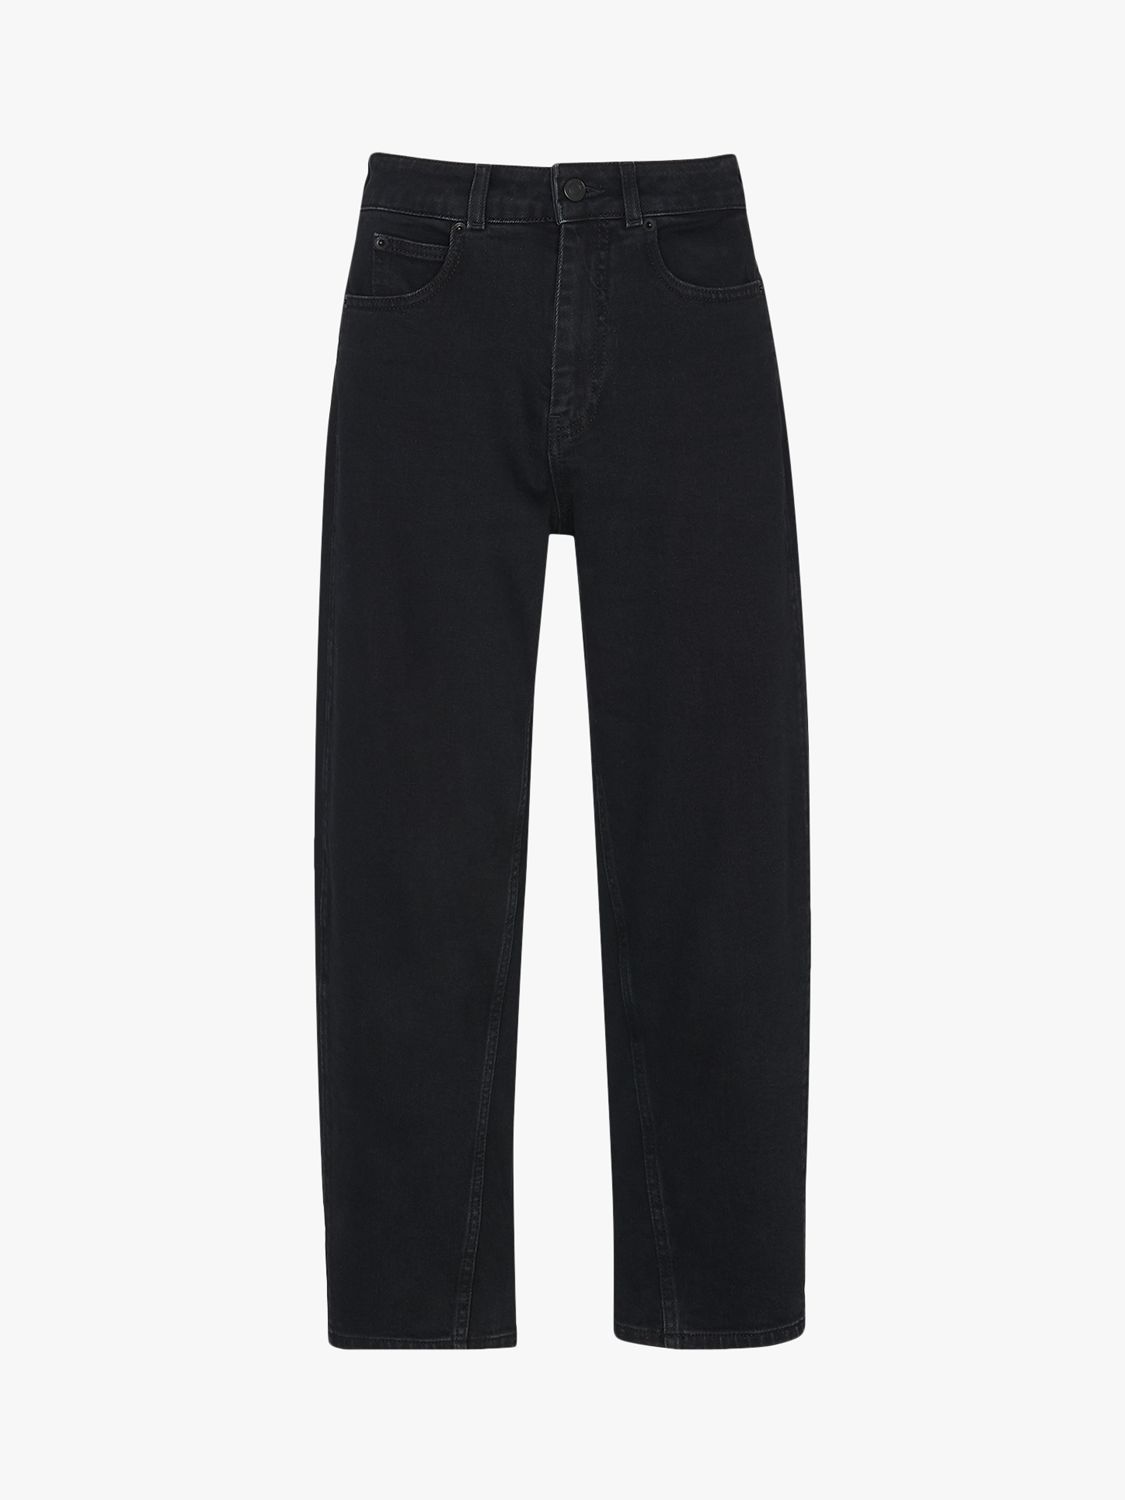 Whistles Organic Ankle Grazer Jeans, Black, 26